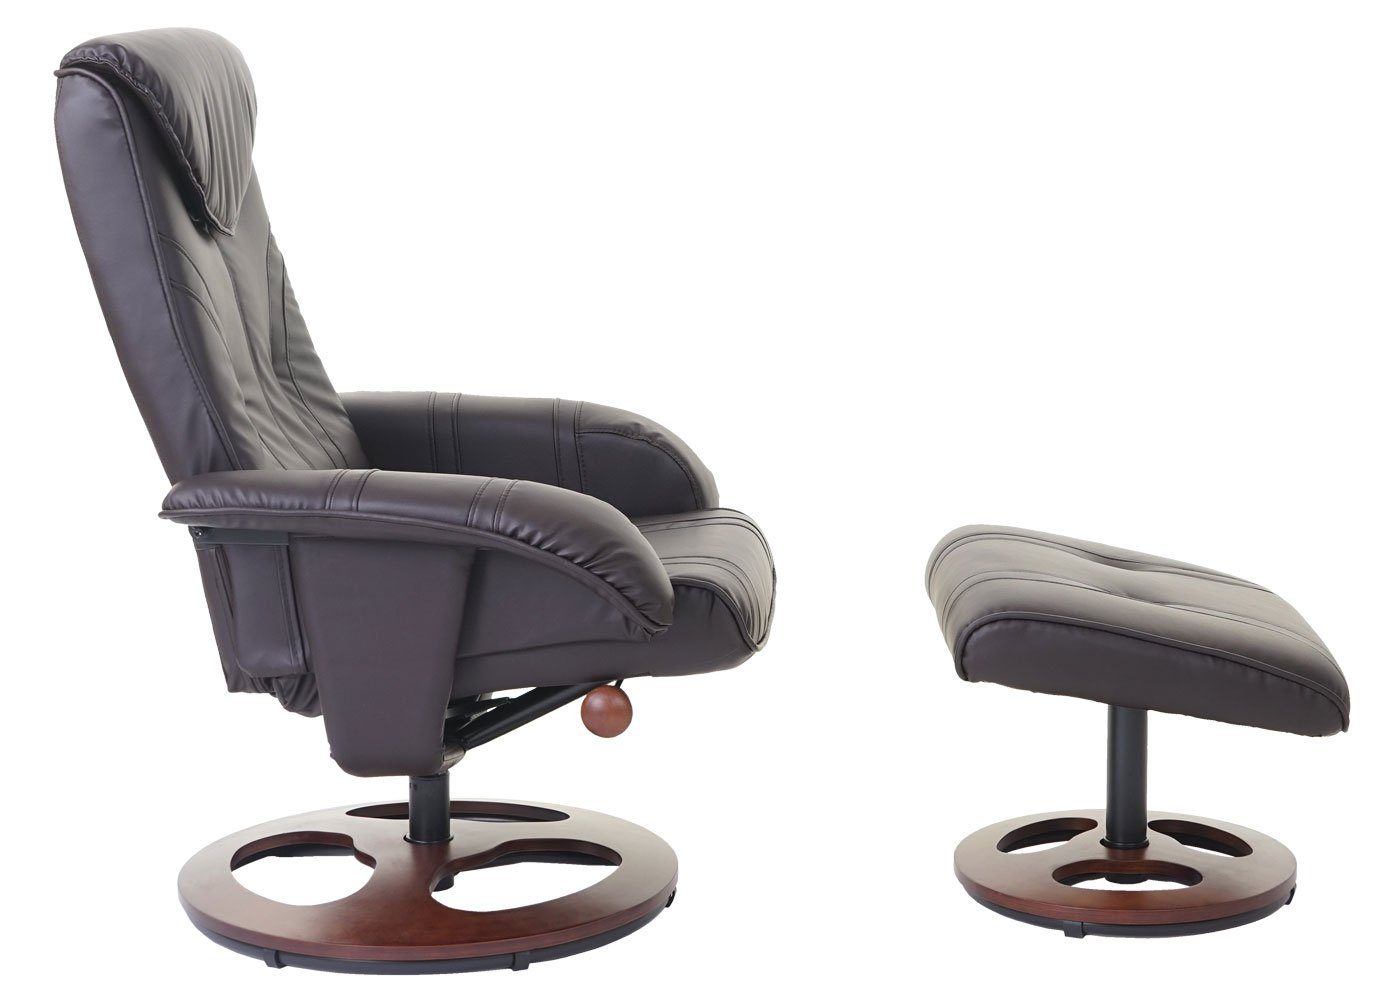 MCW-C46, Sessel Um braun feststellbar Relaxsessel Schraubmechanismus drehbar, 360° neigbar, MCW durch